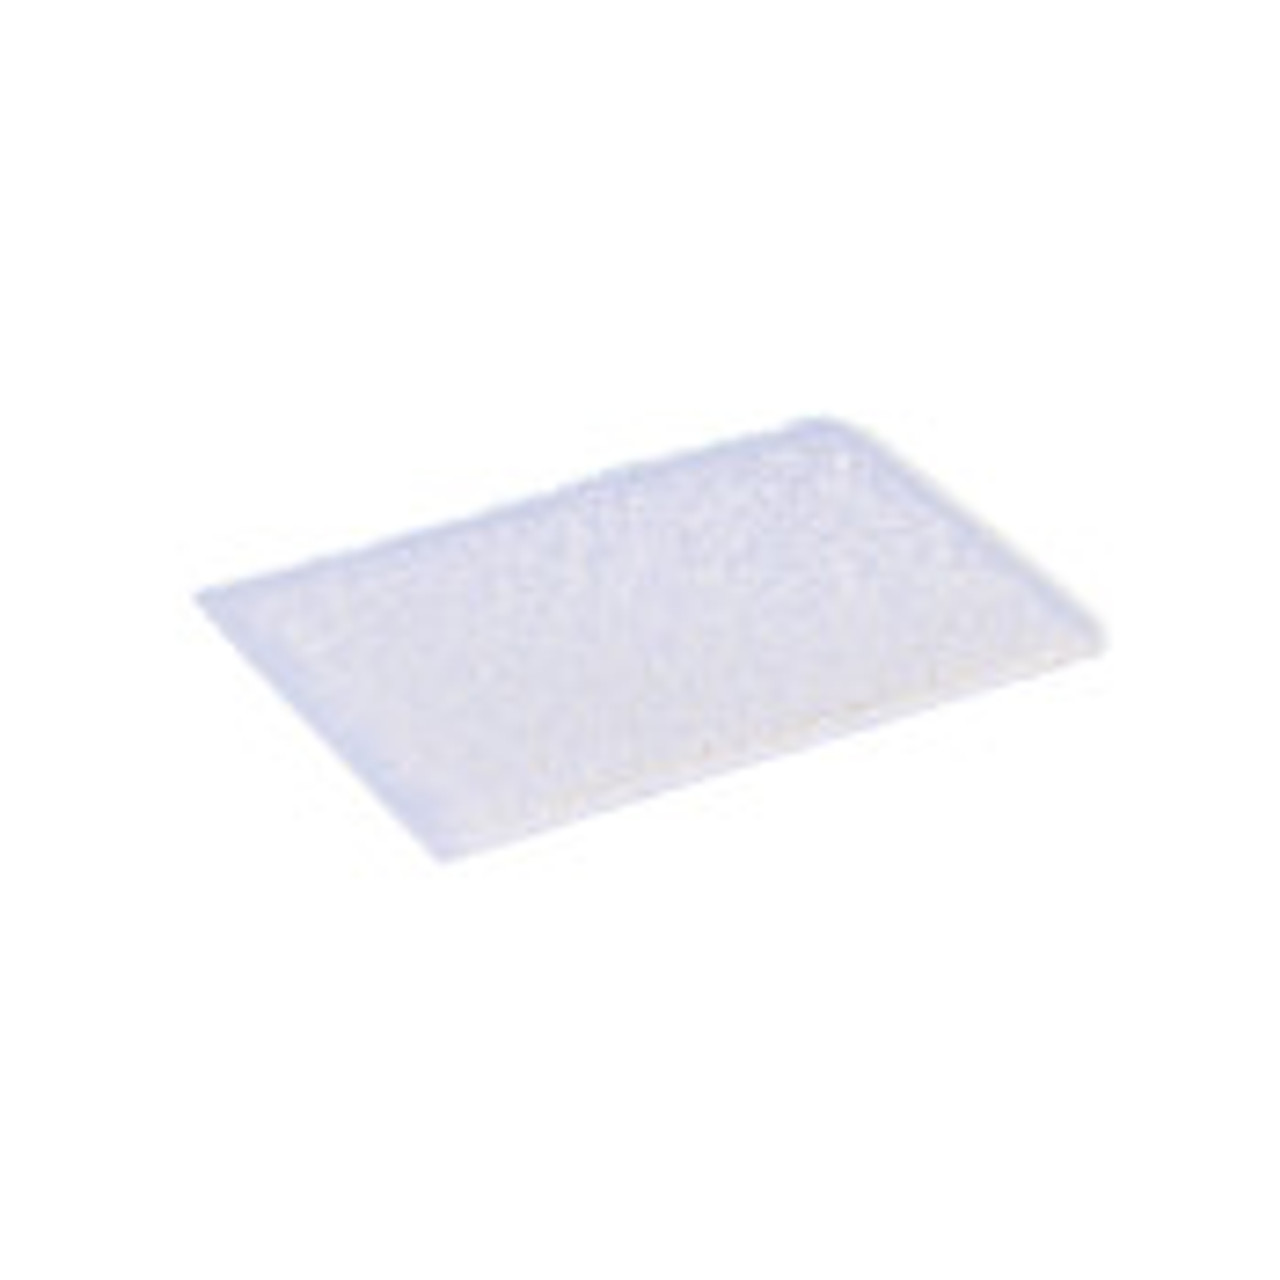 VELCRO® Rubber Adhesive Backed Tape - FeinerSupply